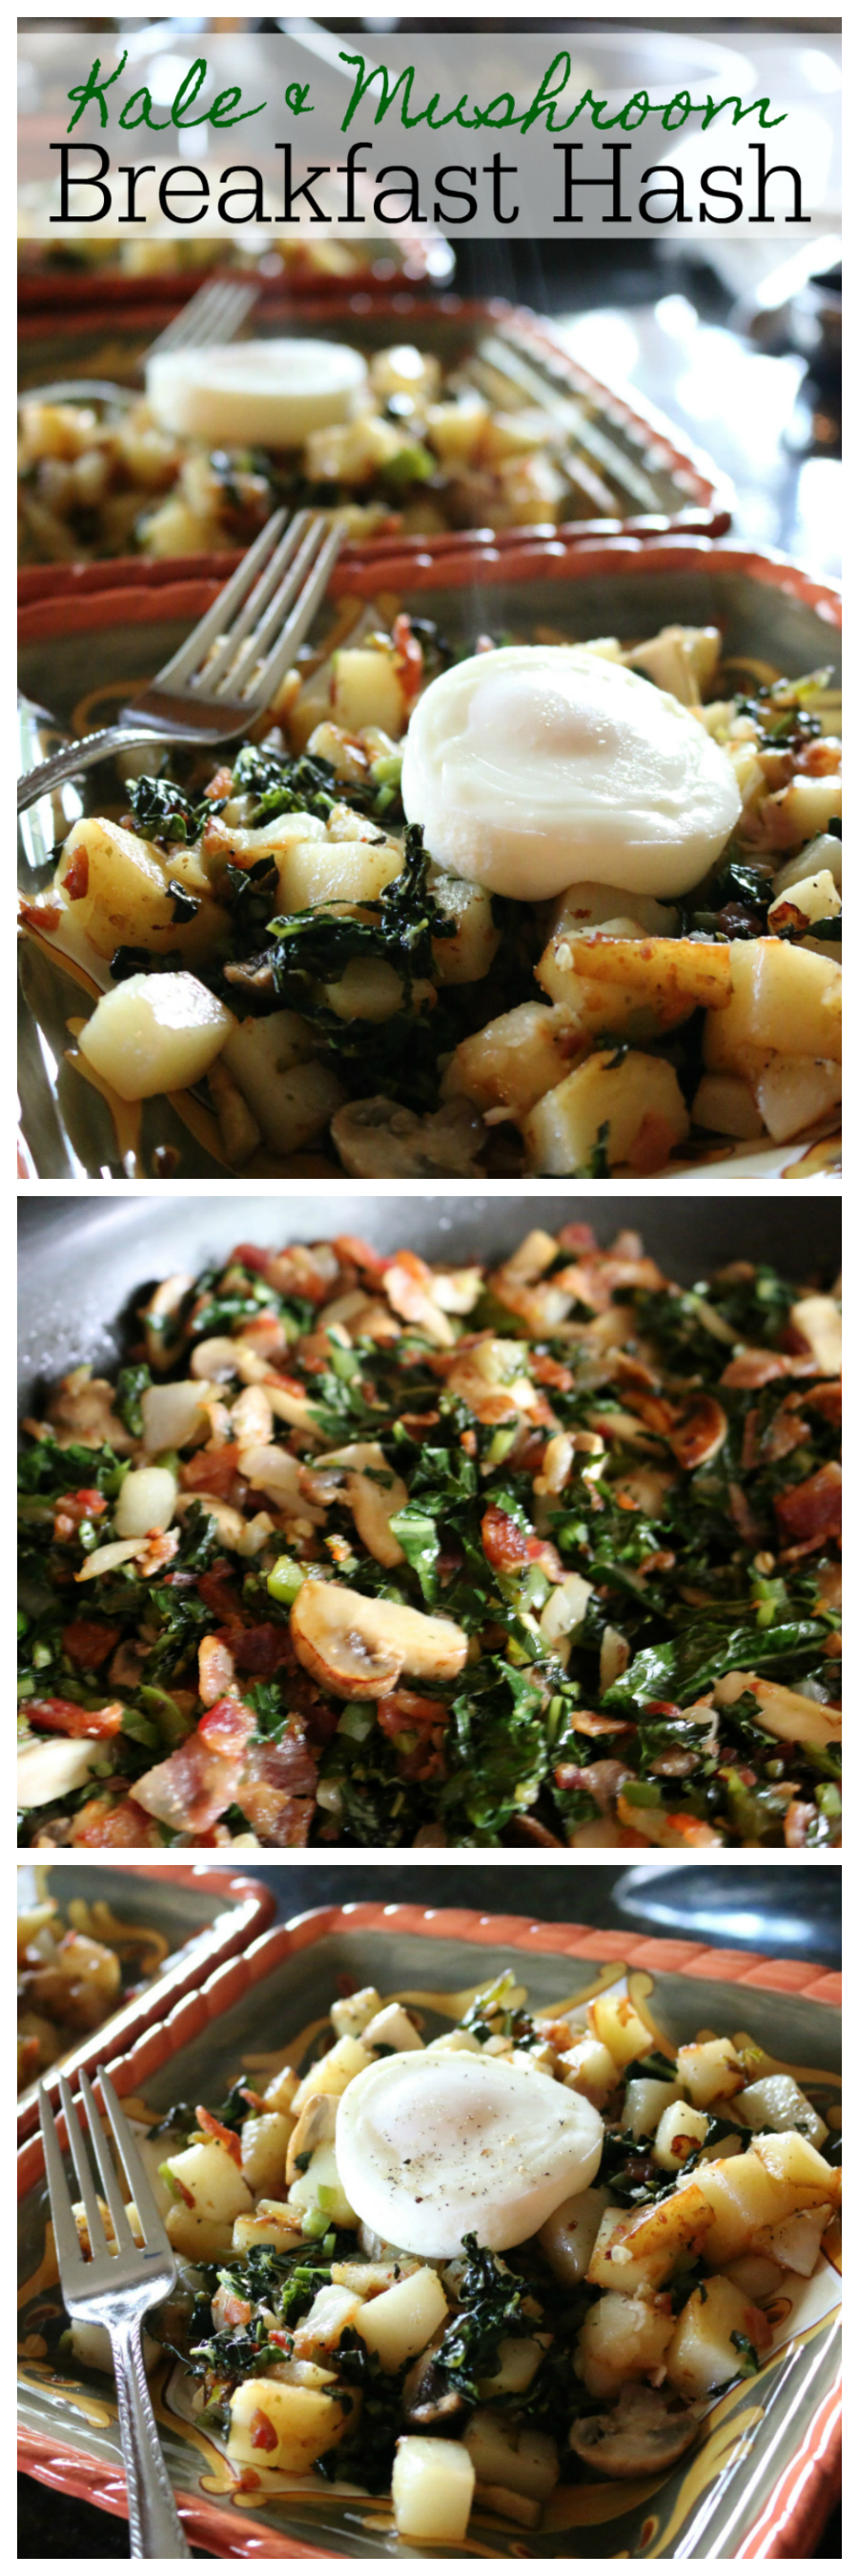 Kale & Mushroom Breakfast Hash Recipe - Great for breakfast or dinner. CeceliasGoodStuff.com Good Food for Good People